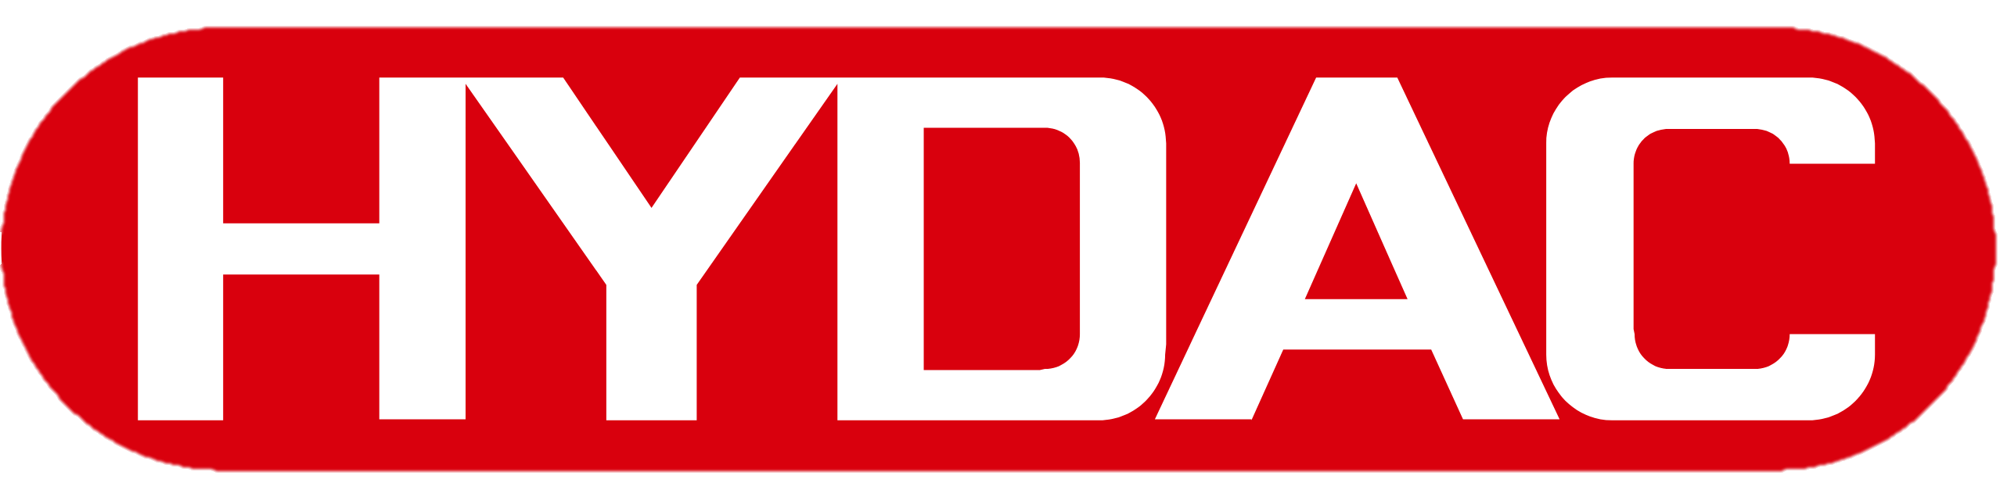 Hydac_logo.PNG